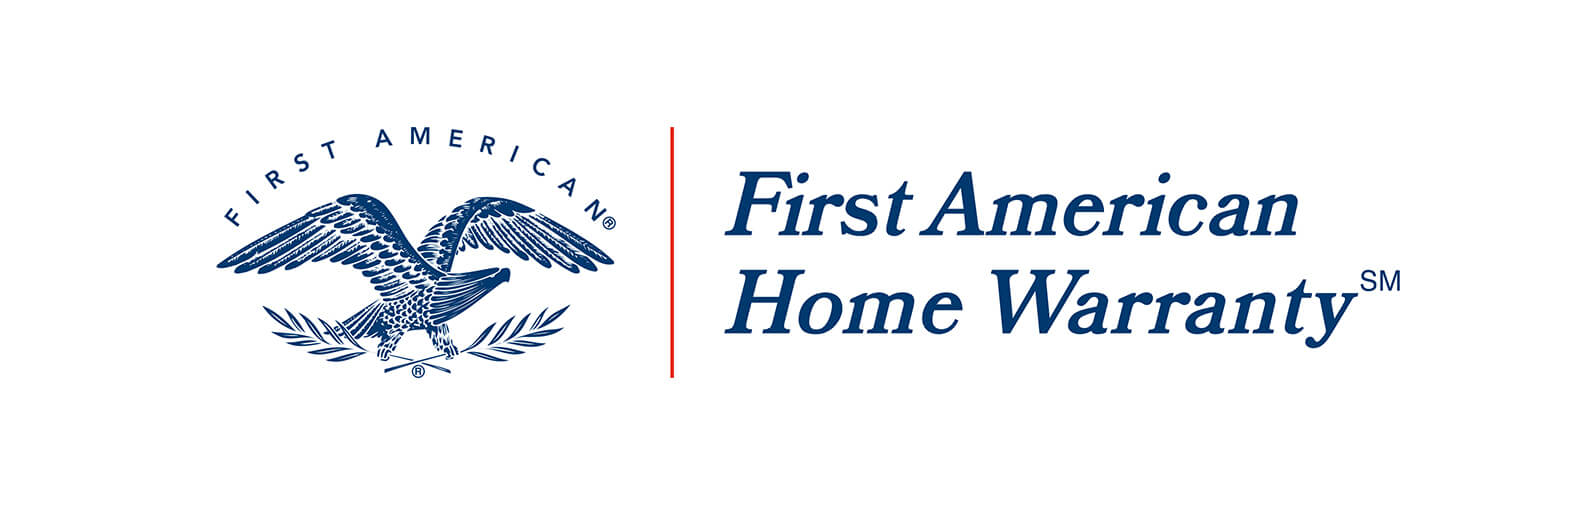 First American Home Warranty - Logo